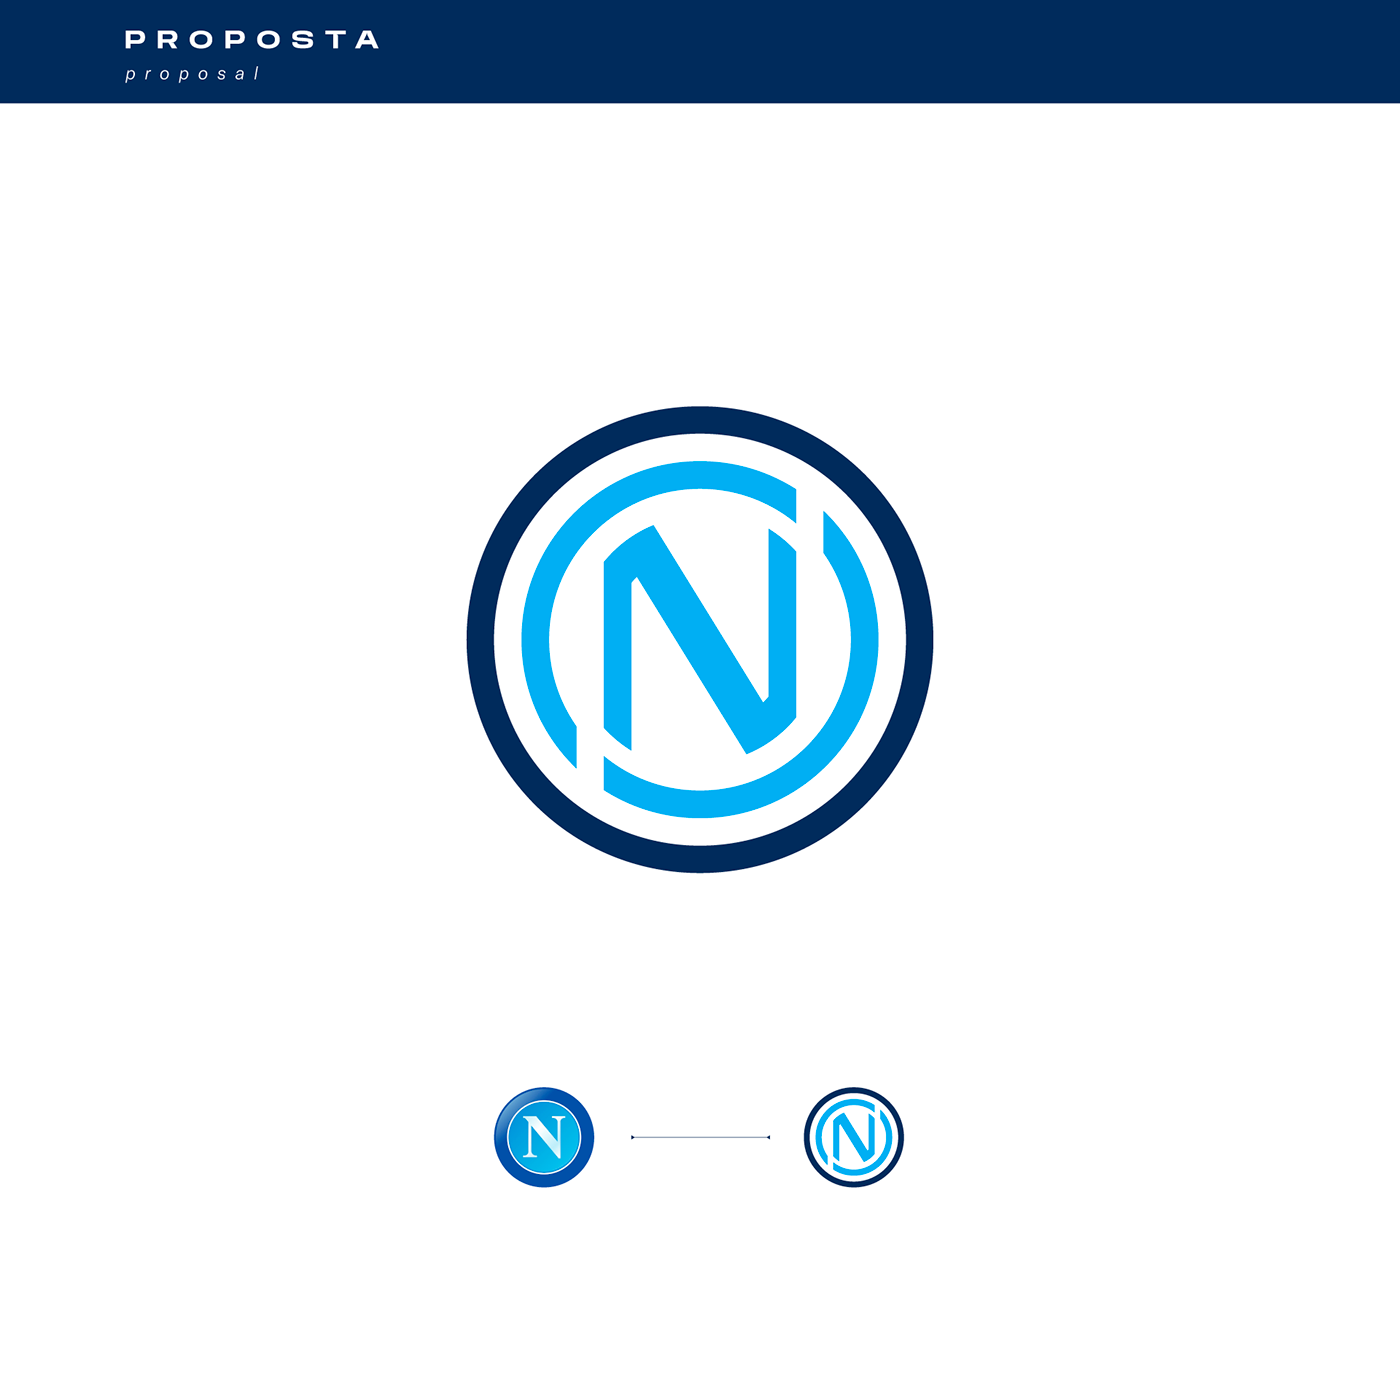 rebranding Logo Design SSC Napoli Serie A calcio design sport logo NAPOLI brand identity football